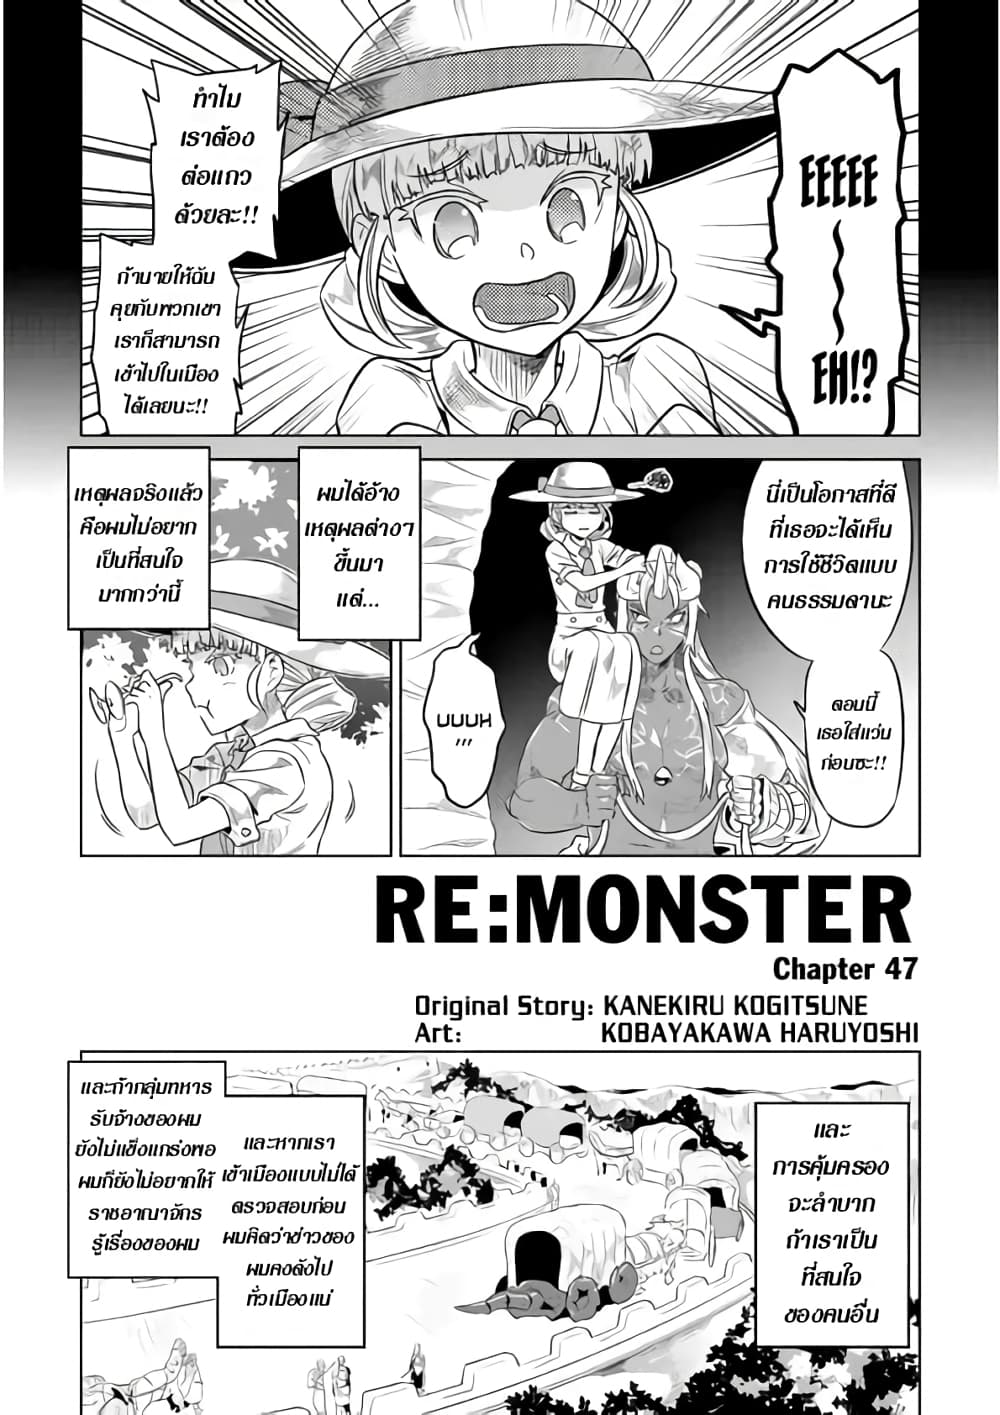 ReMonster47 (1)